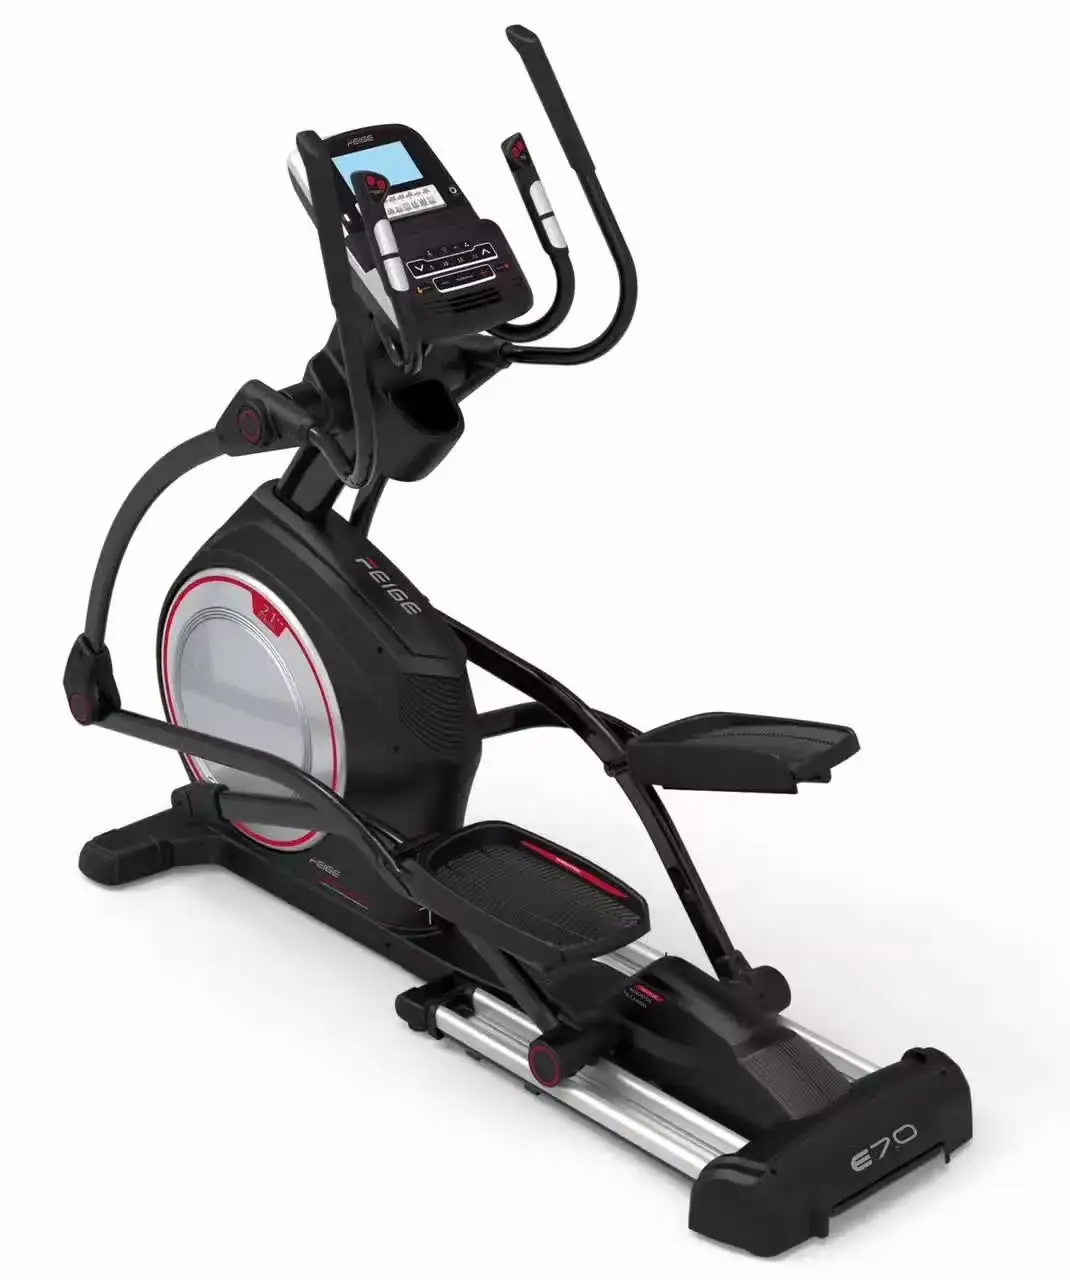 Huiti Multi Function Elliptical Trainer cardio fitness machine gym equipment home use treadmill spinning bike